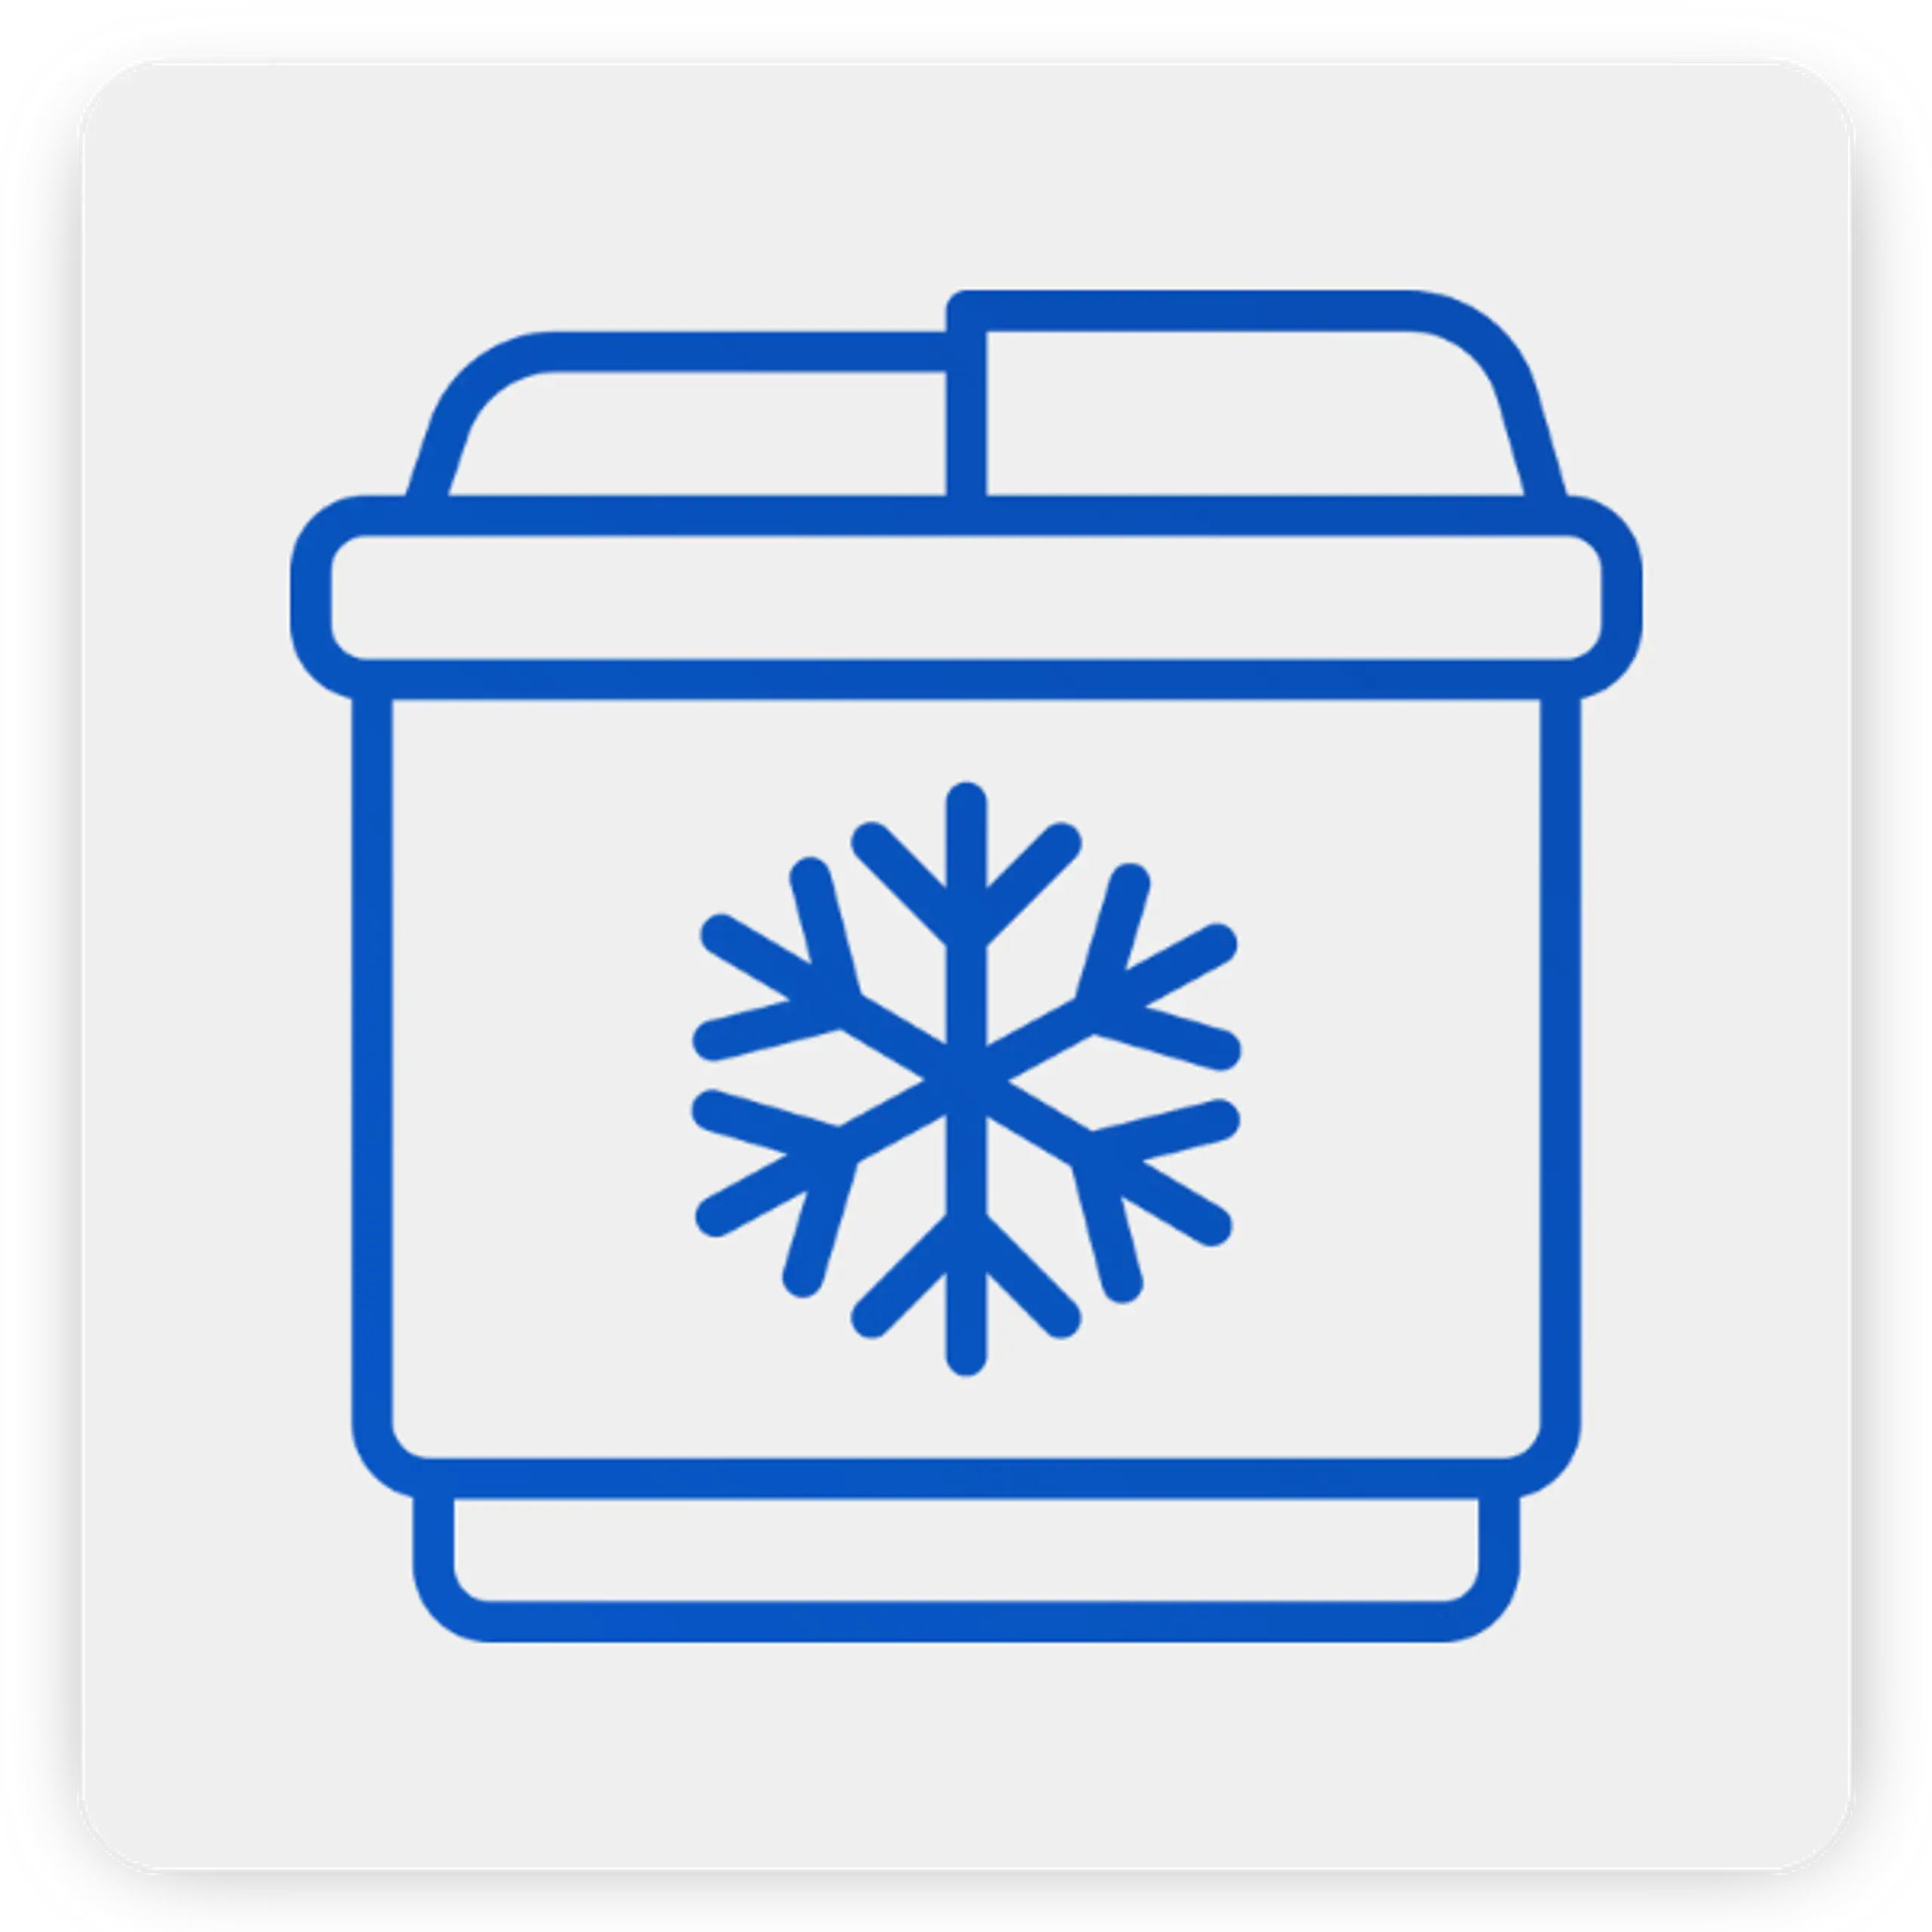 Icon of a freezer